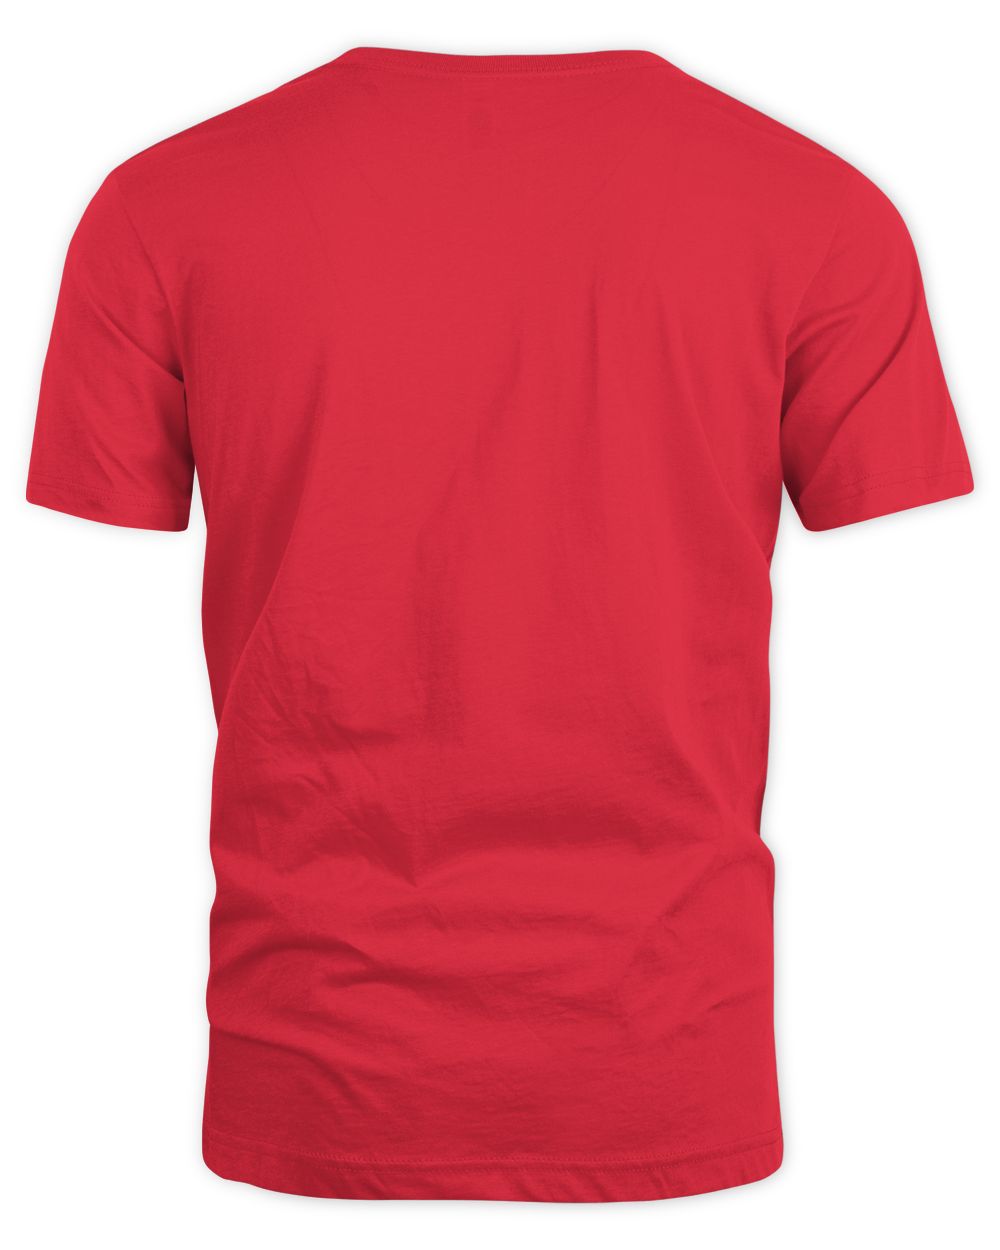 Olivia Rodrigo Merch Drivers Licence Shirt Unisex Standard T-Shirt red 